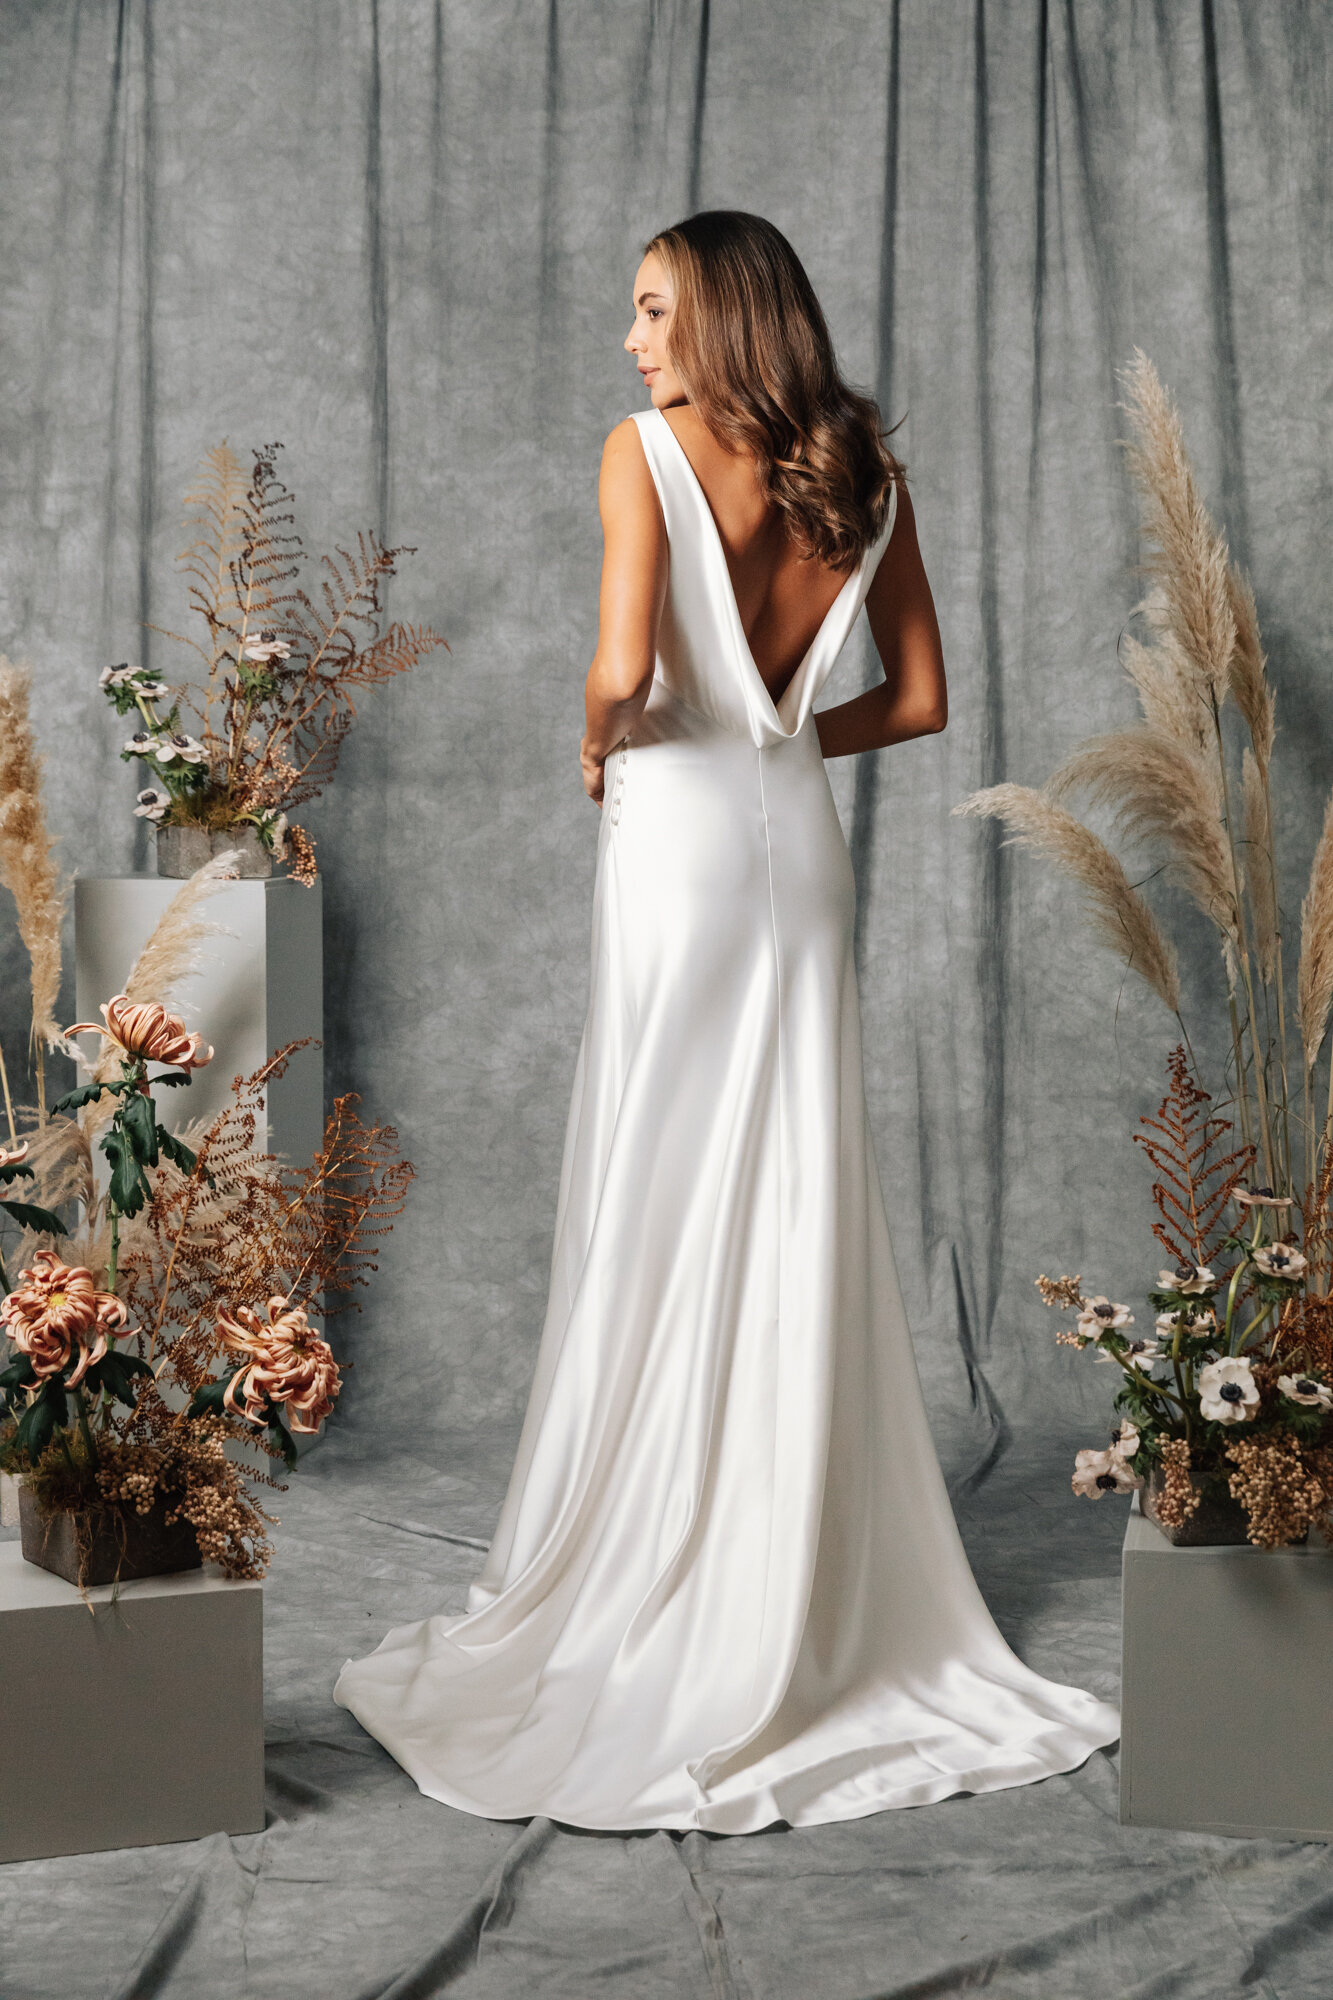 https://images.squarespace-cdn.com/content/v1/5a5c95f0a803bbf08cd2a5e0/1605692293602-VDYU6KO33KU5YVV30J4D/1-Gladioli-Kate-Beaumont-Bias-Cut-Silk-Elegant-Cowl-Back-Wedding-Gown-317.jpg